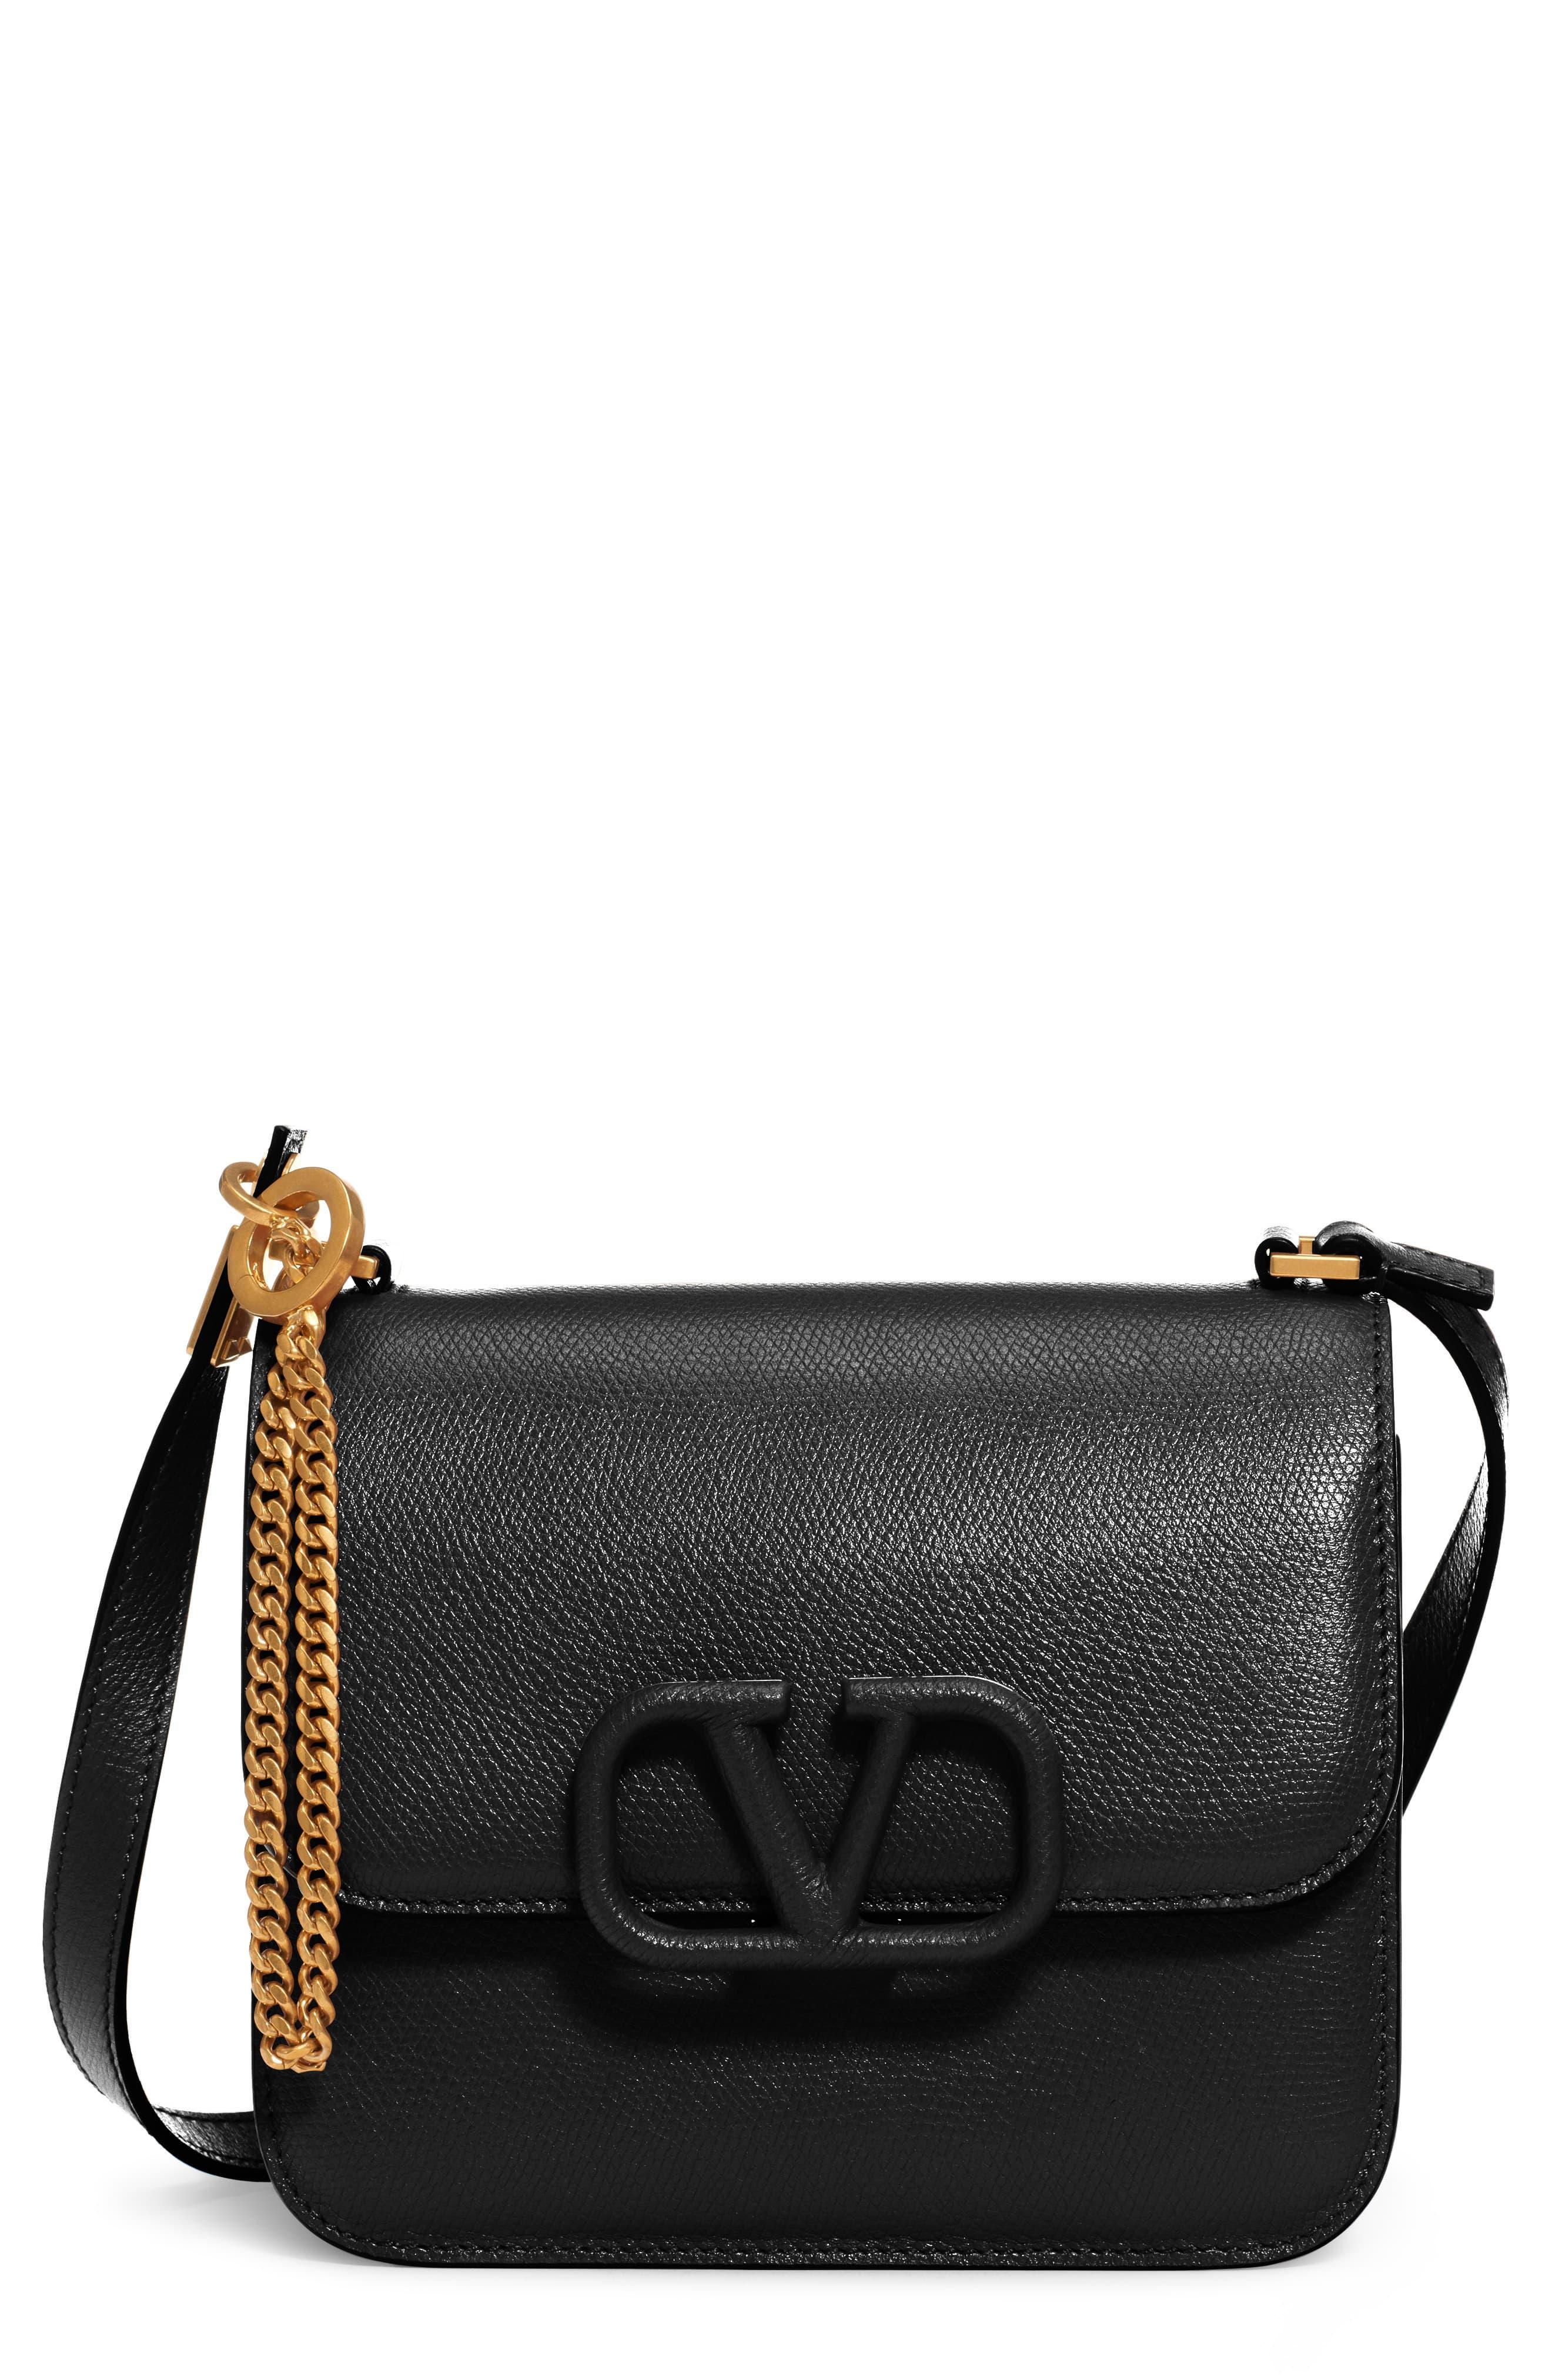 Valentino Small V-sling Leather Shoulder Bag in Nero (Black) - Lyst